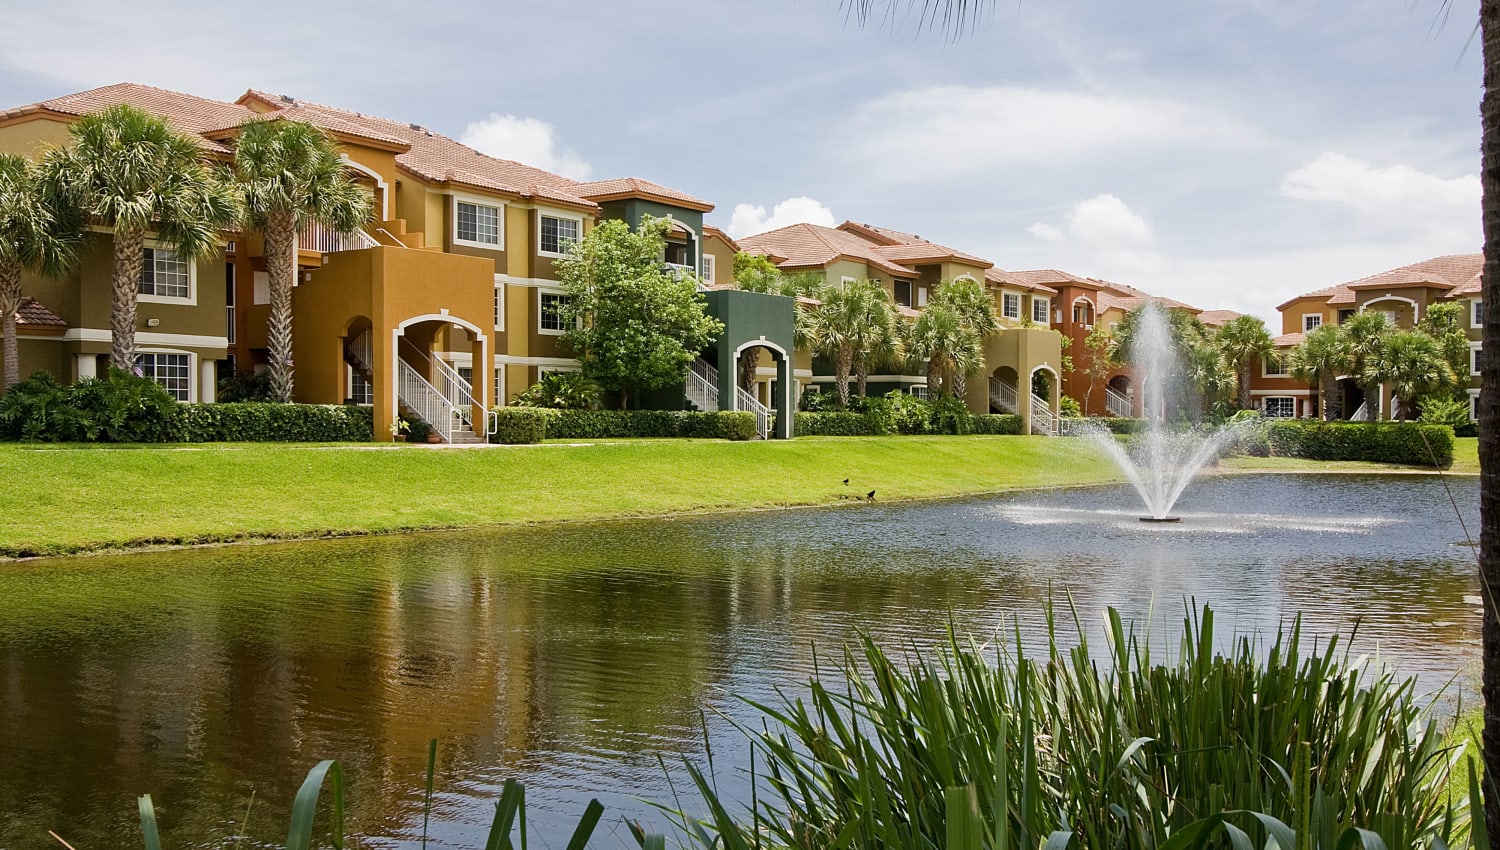 Exterior of Manatee Bay Apartments by the lake in Boynton Beach, Florida